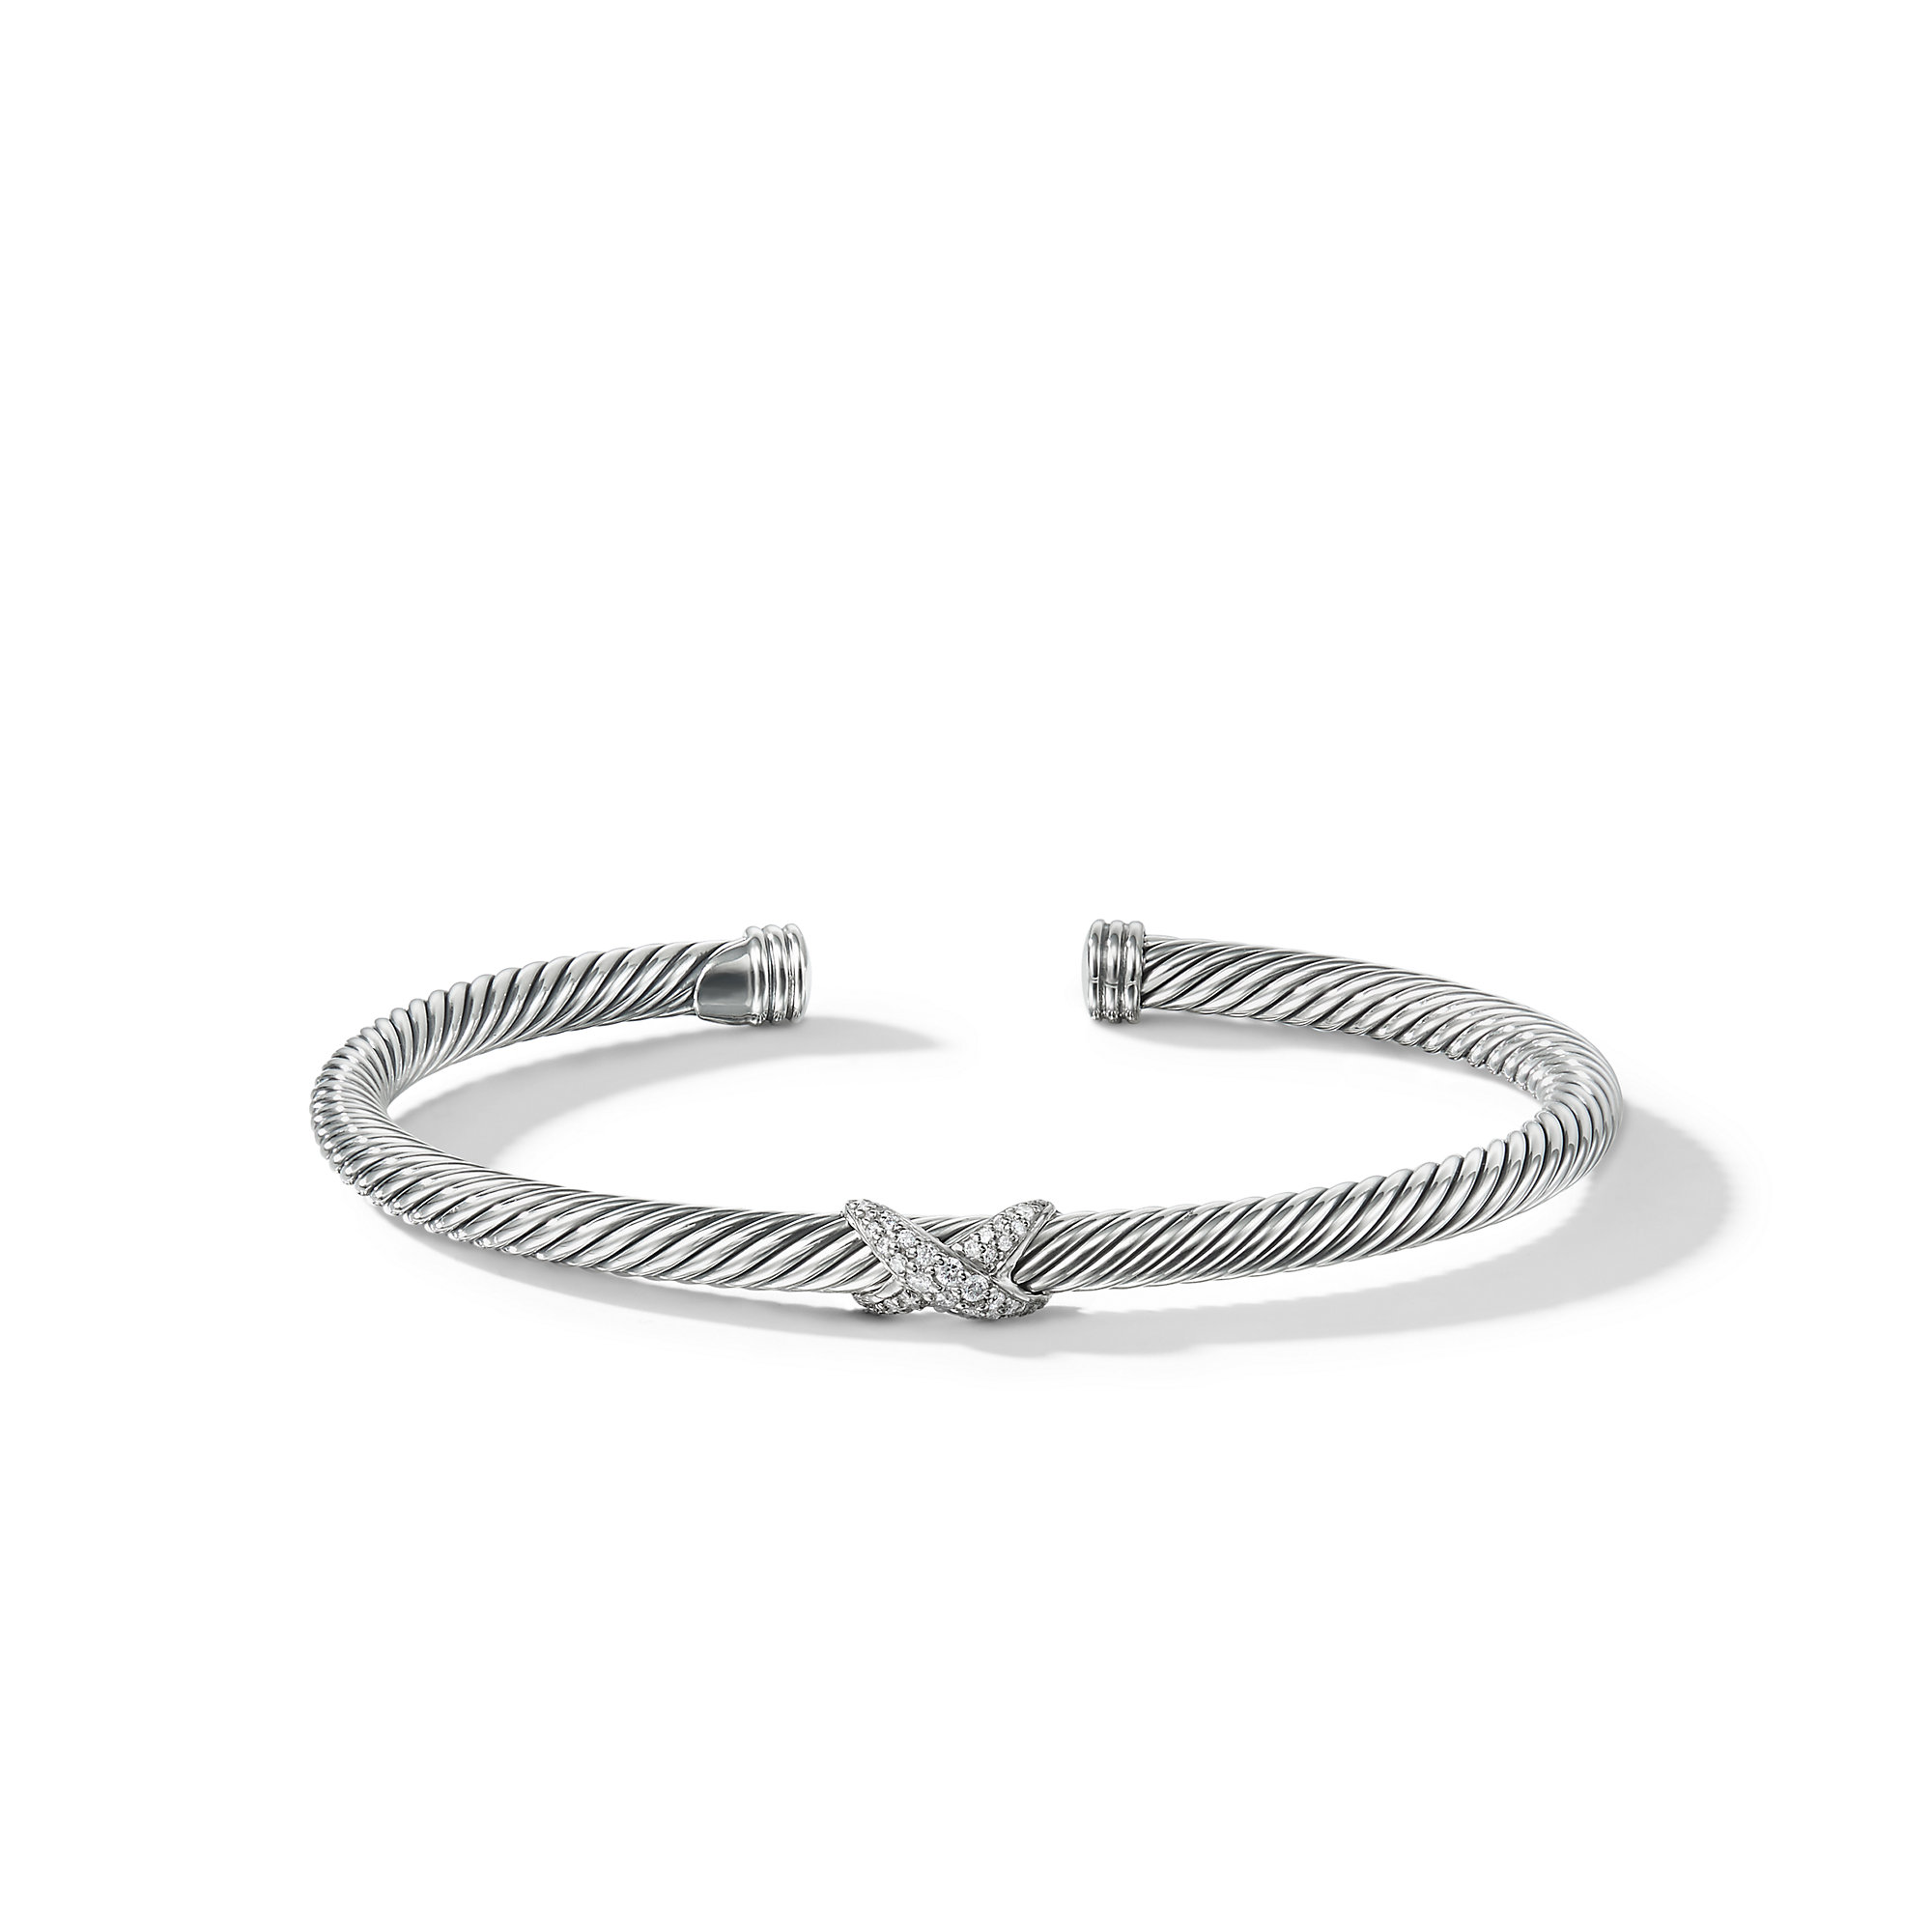 X Bracelet with Diamonds - B11294DSSADI